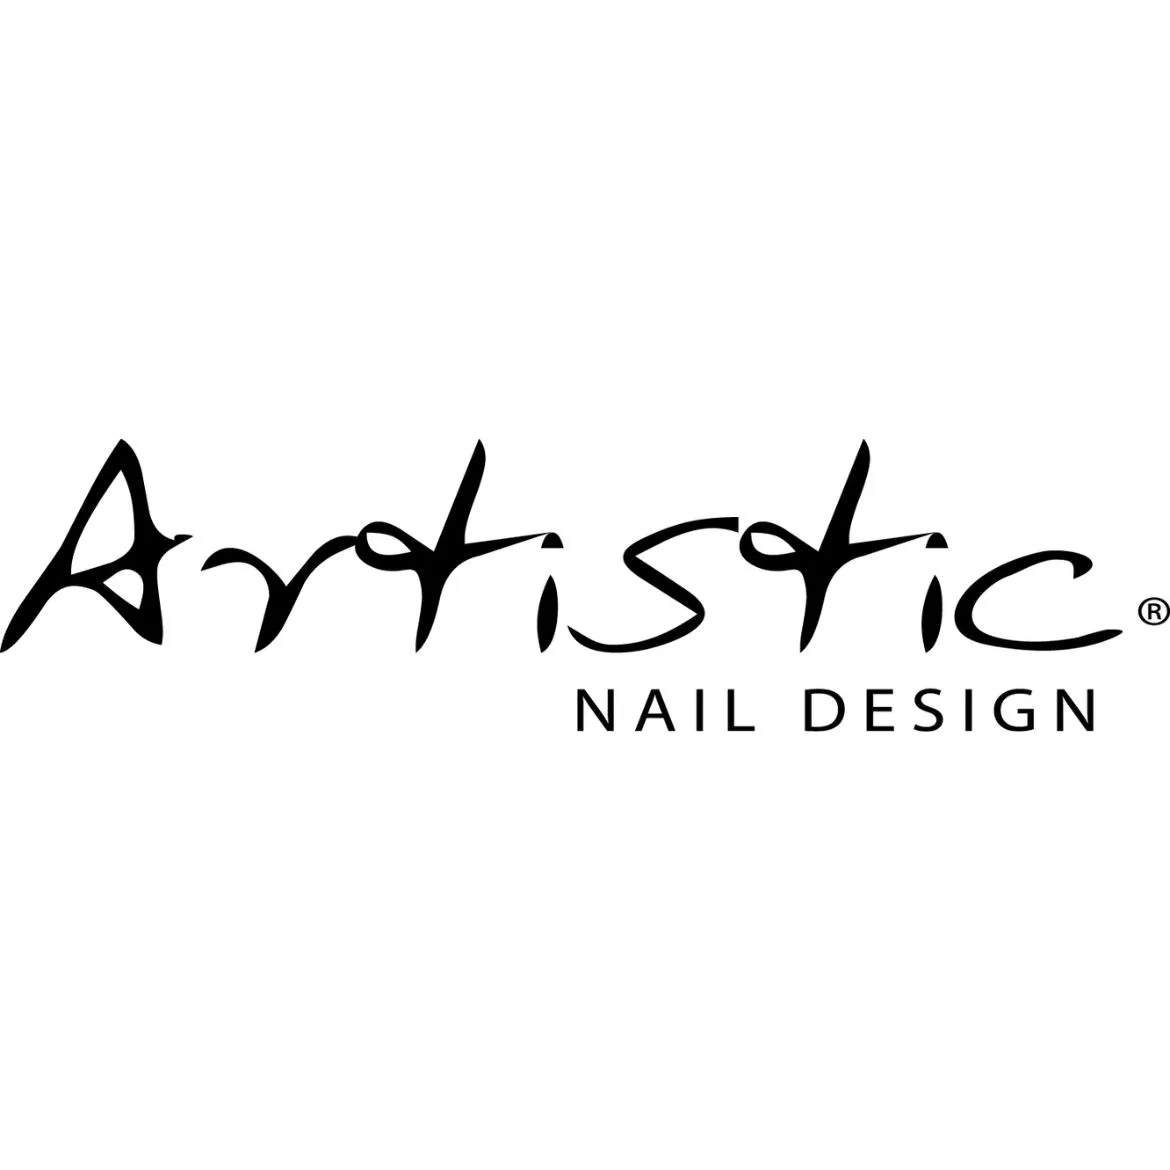 Artistic Nail Design